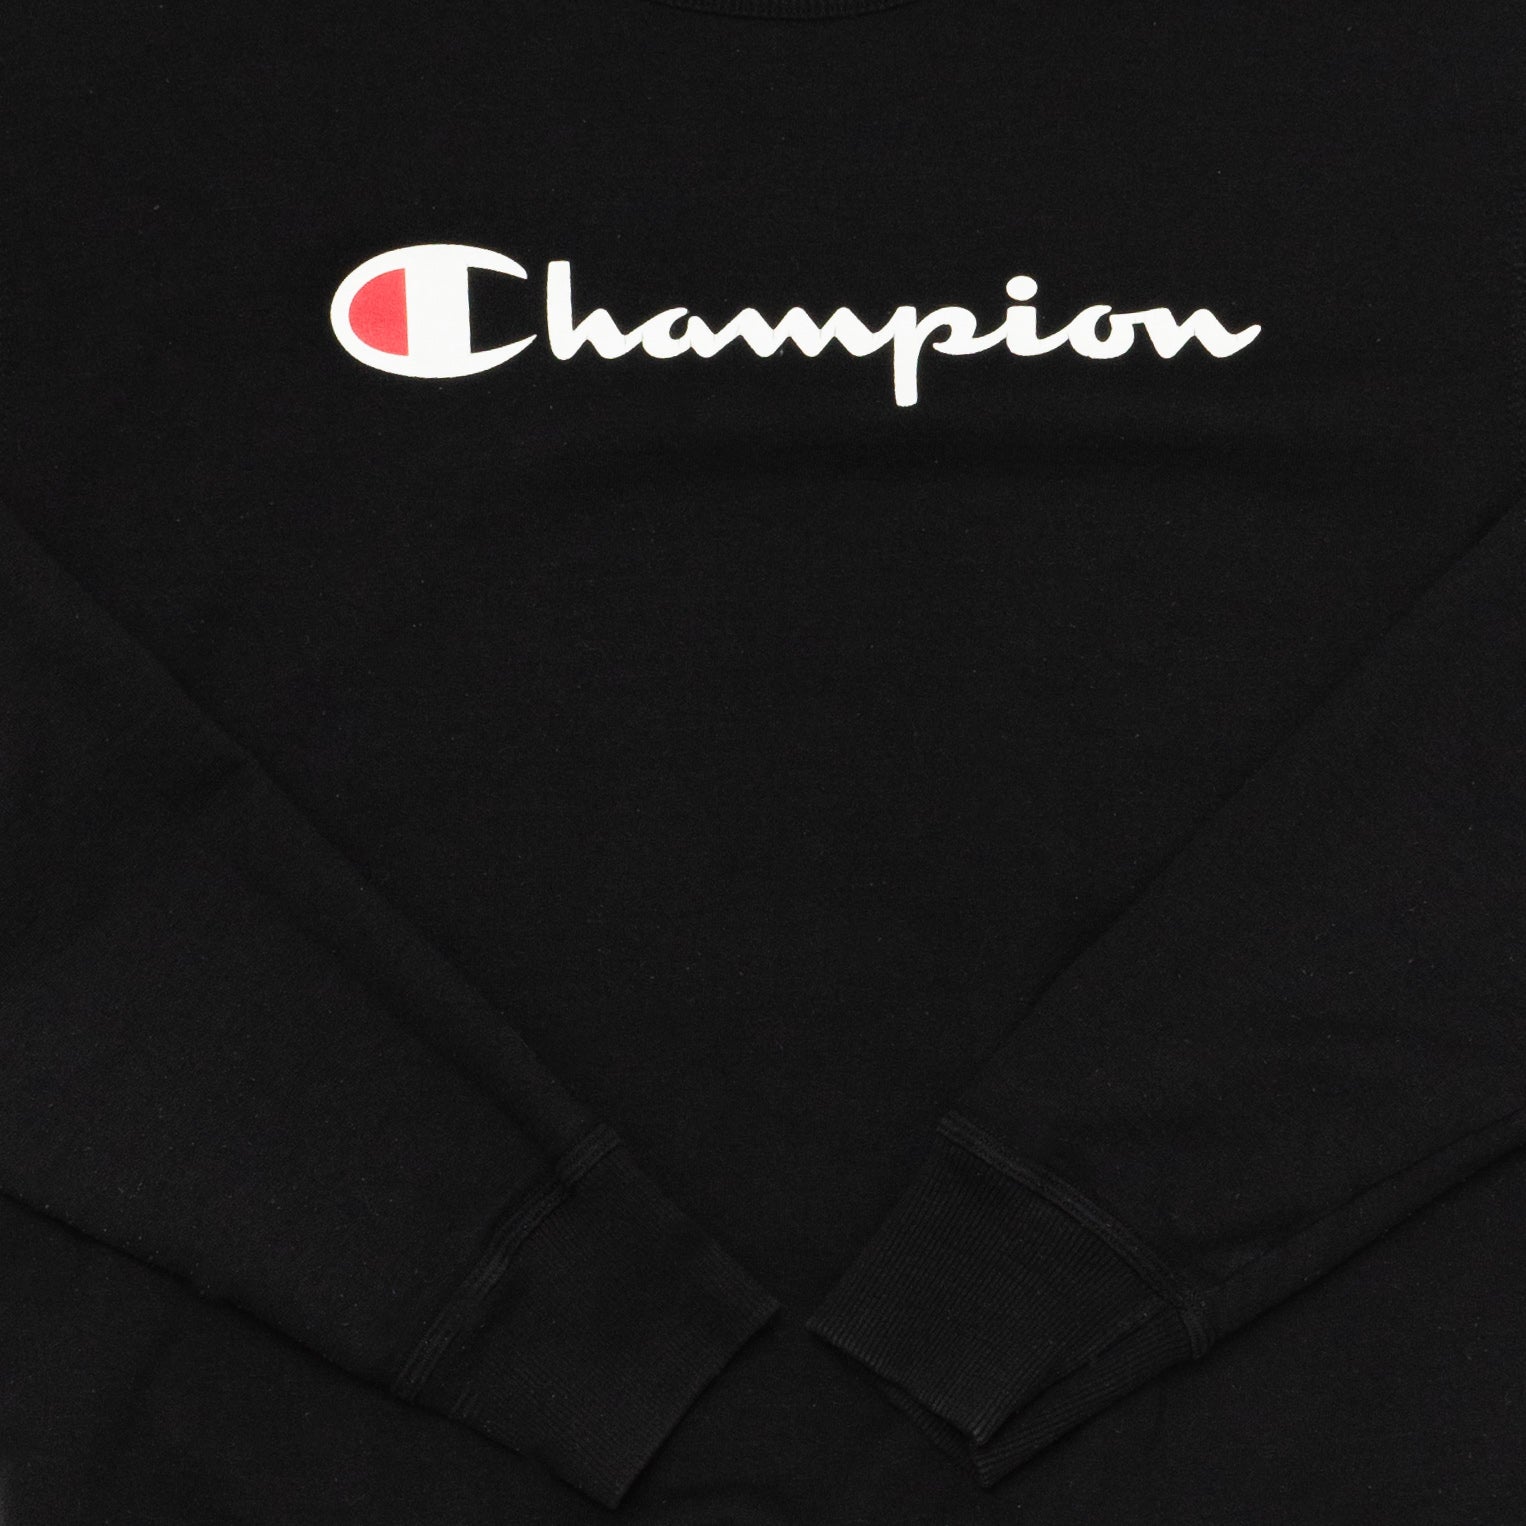 Champion Sweatshirt 